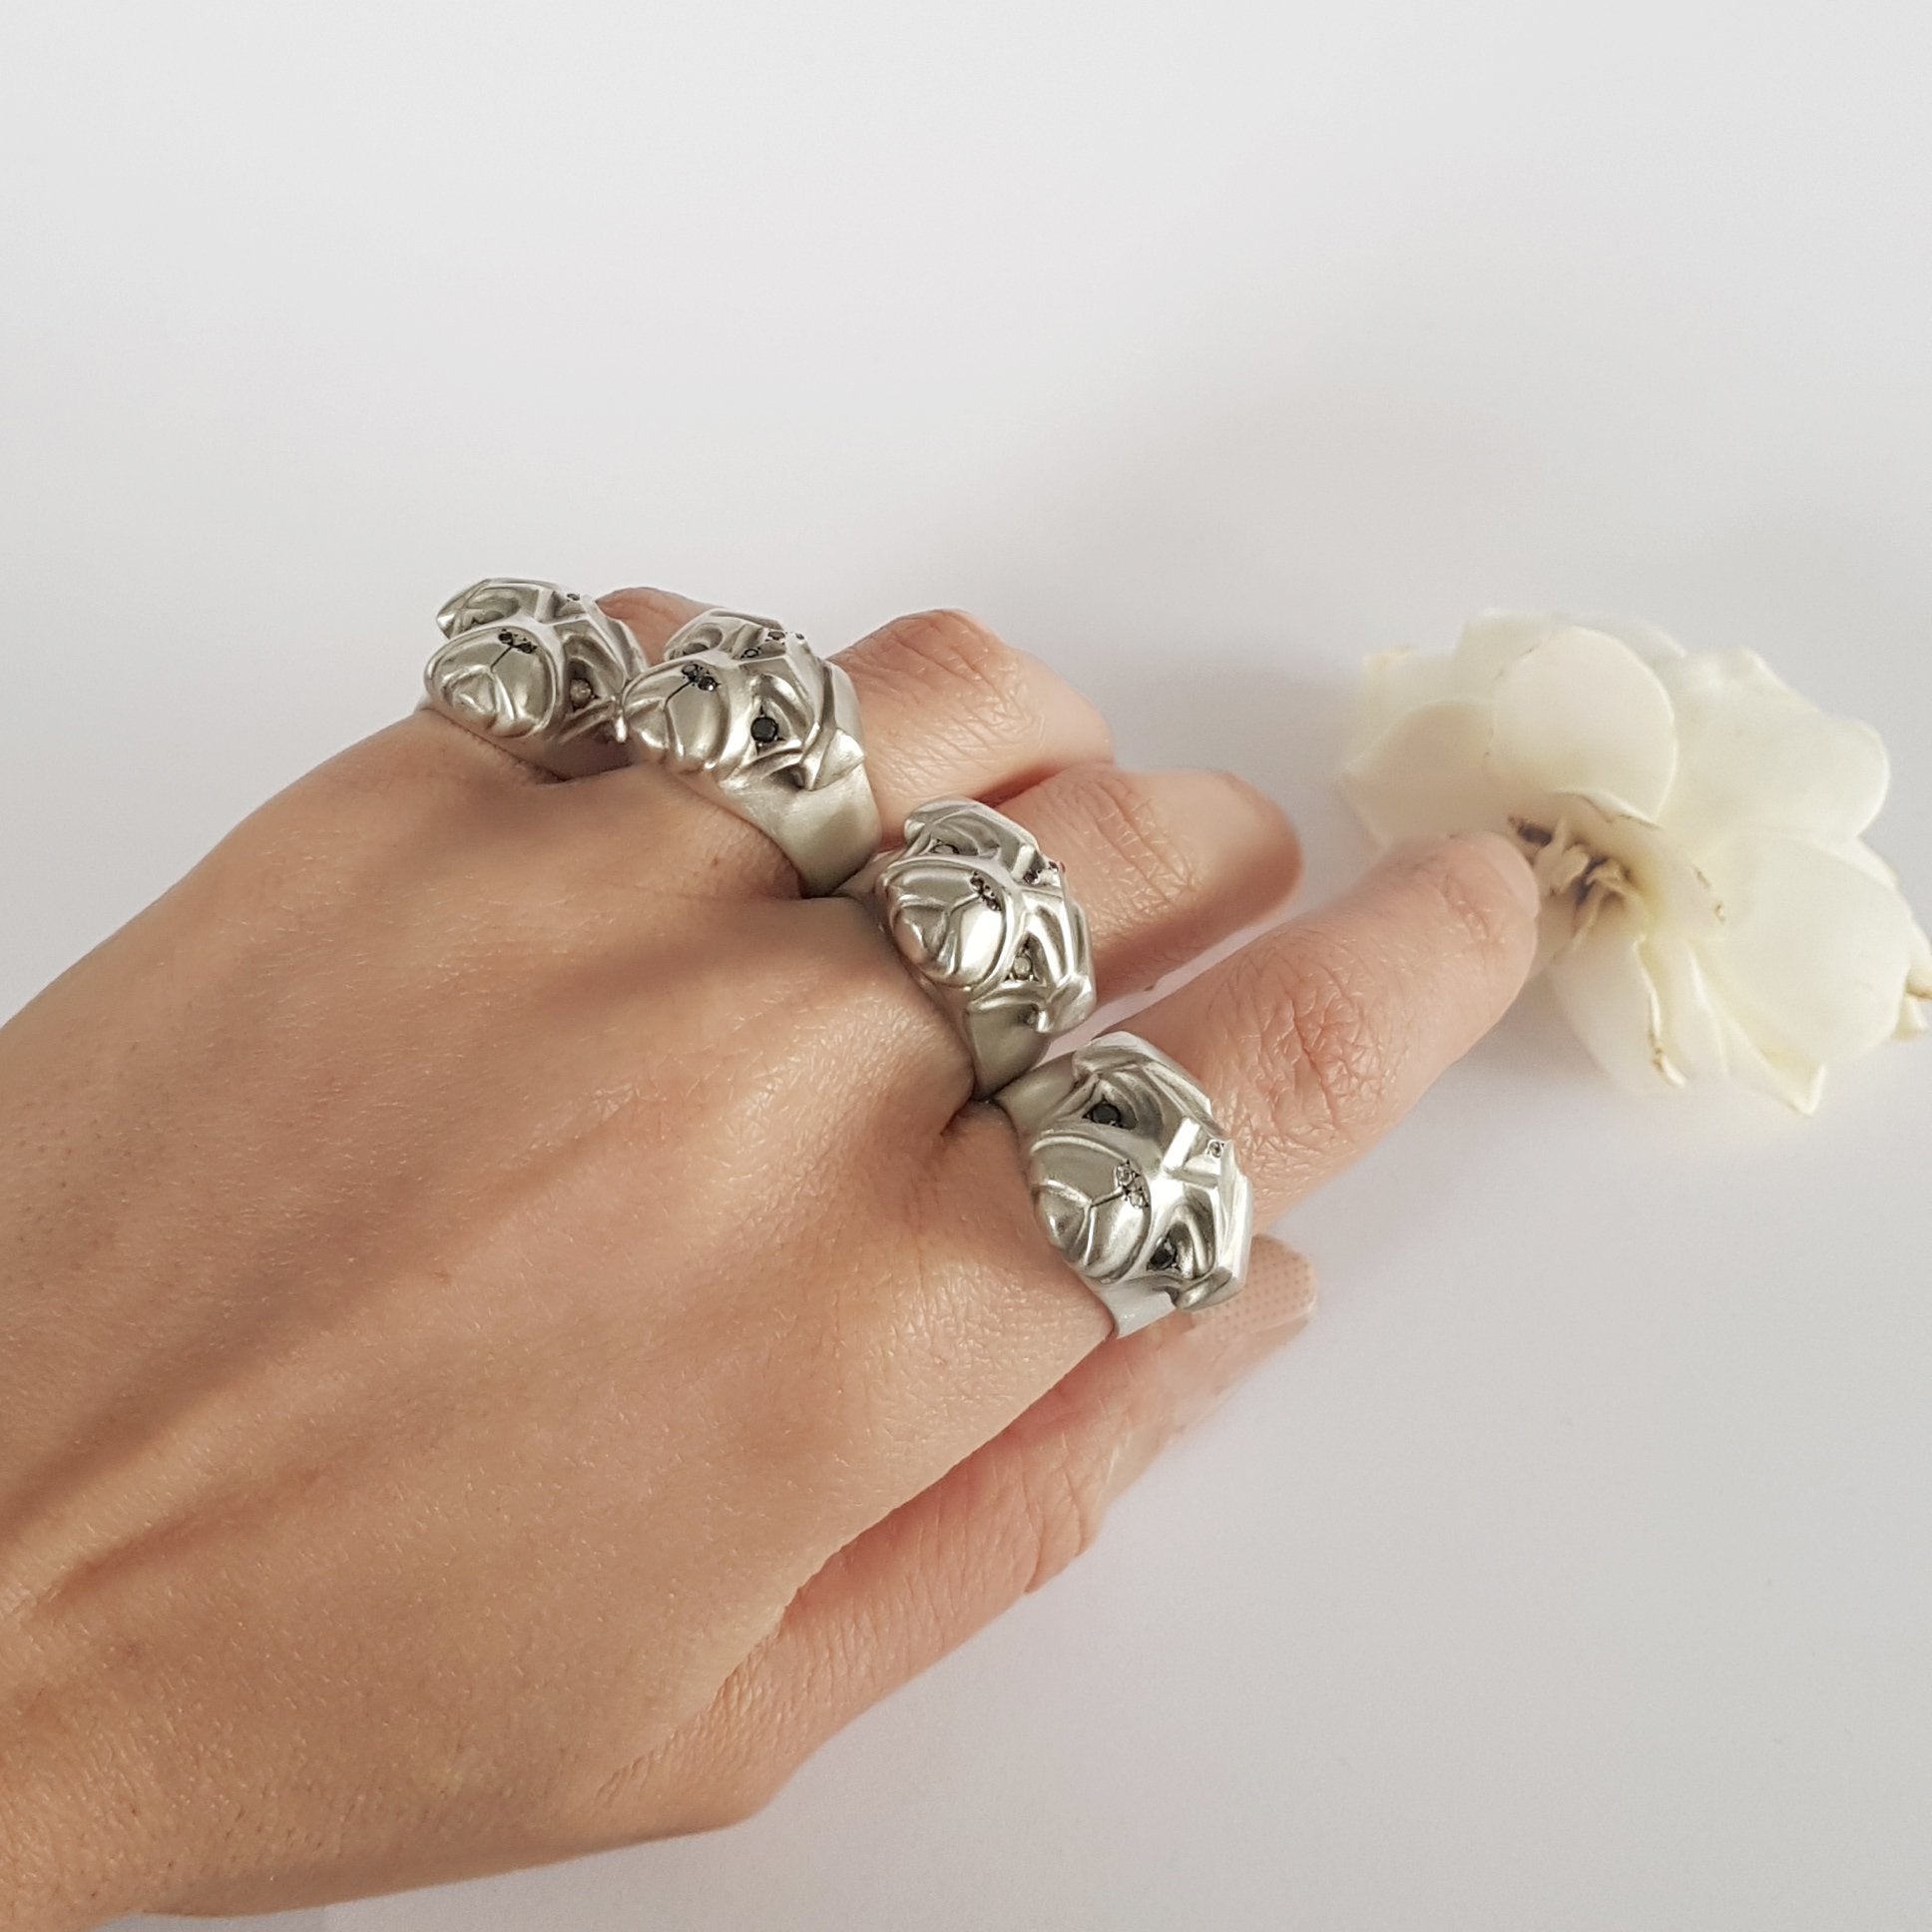 ELINA GLEIZER Jewelry Pug Ring with Black & White Diamonds